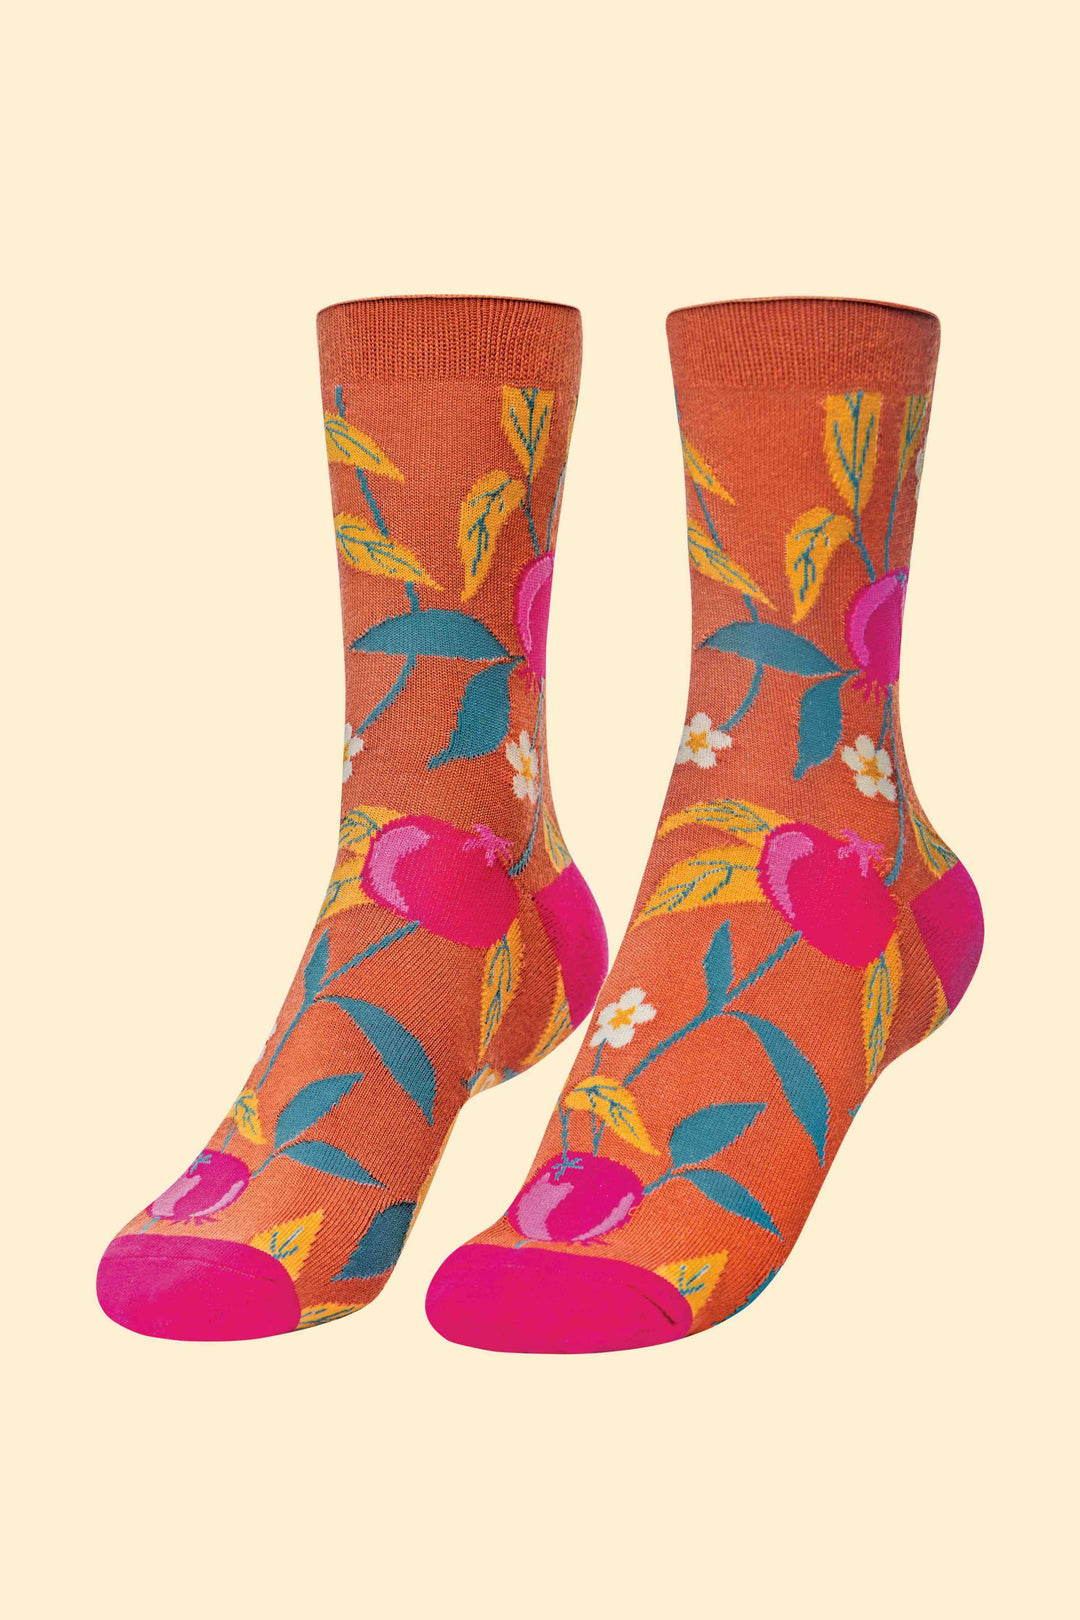 Powder Design inc - Pomegranate Ankle Socks - Tangerine